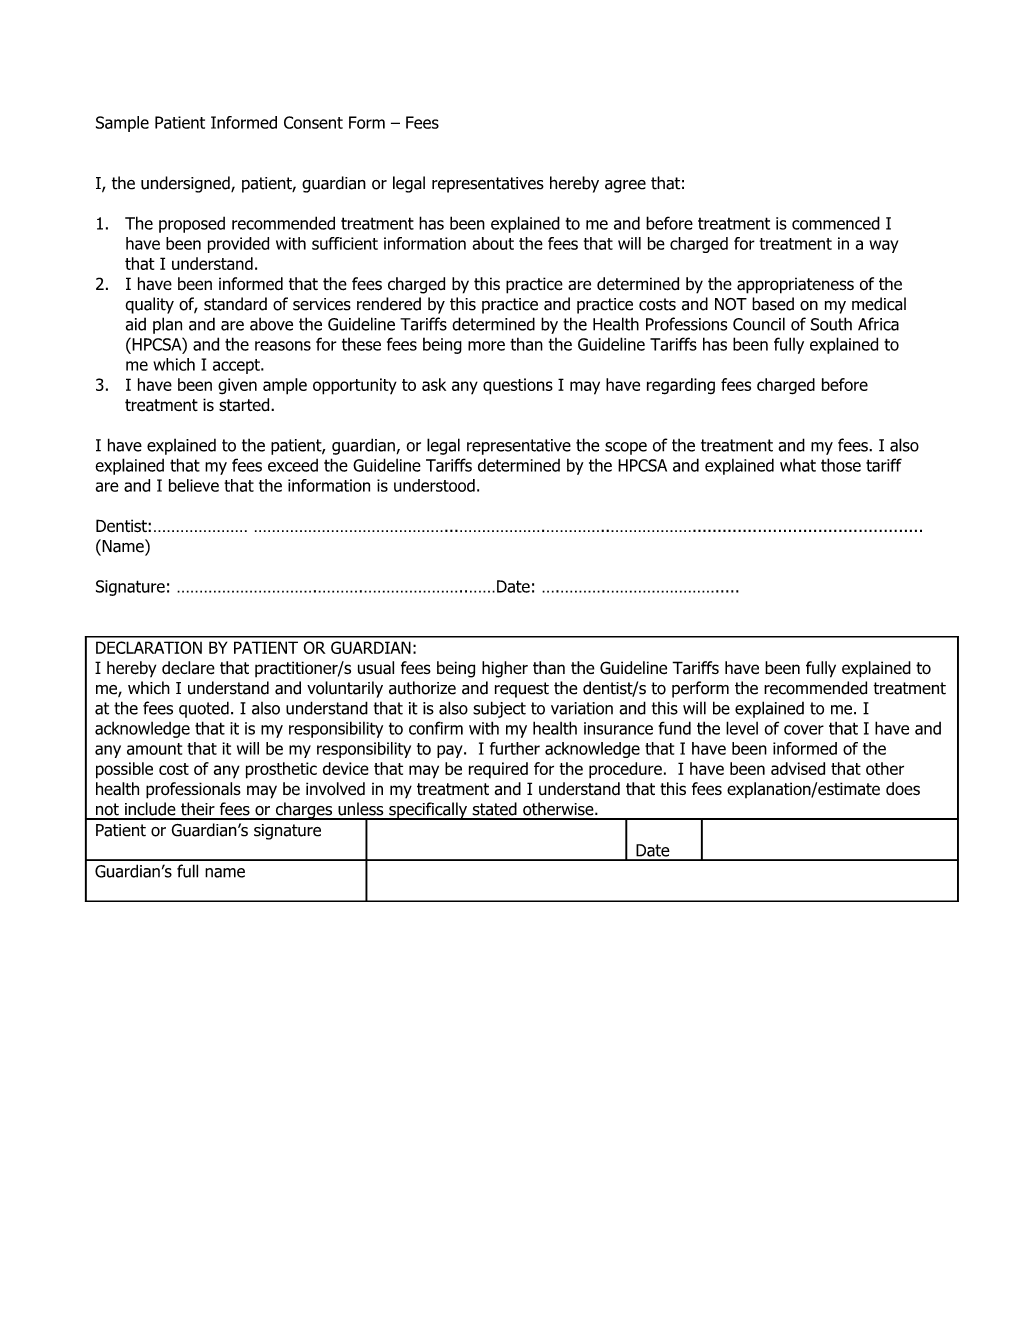 Sample Patient Information/Informed Consent Form